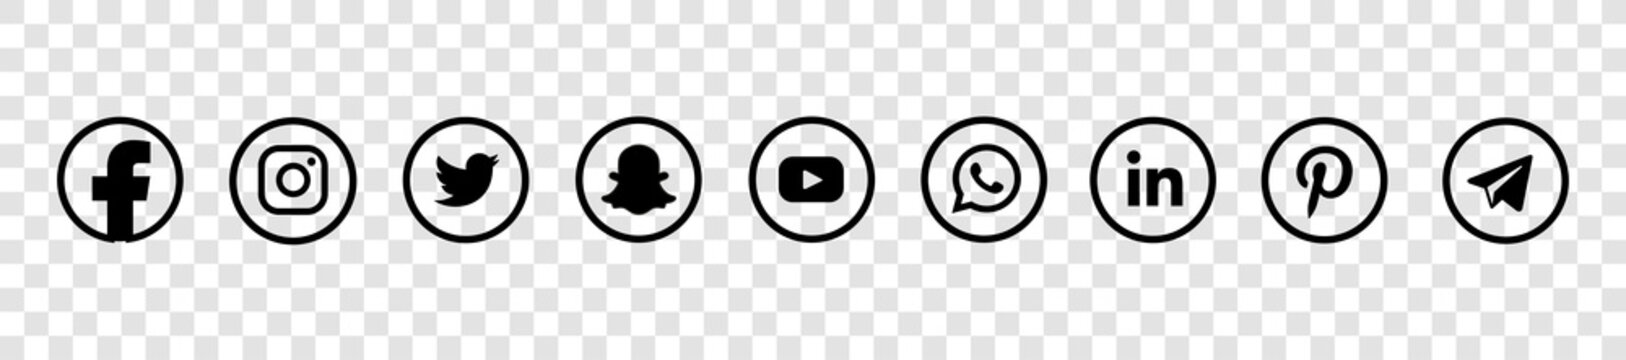 Facebook, twitter, instagram, youtube, snapchat, pinterest, whatsap, linkedin, periscope, vimeo - Collection of popular social media logo. Social media icons.